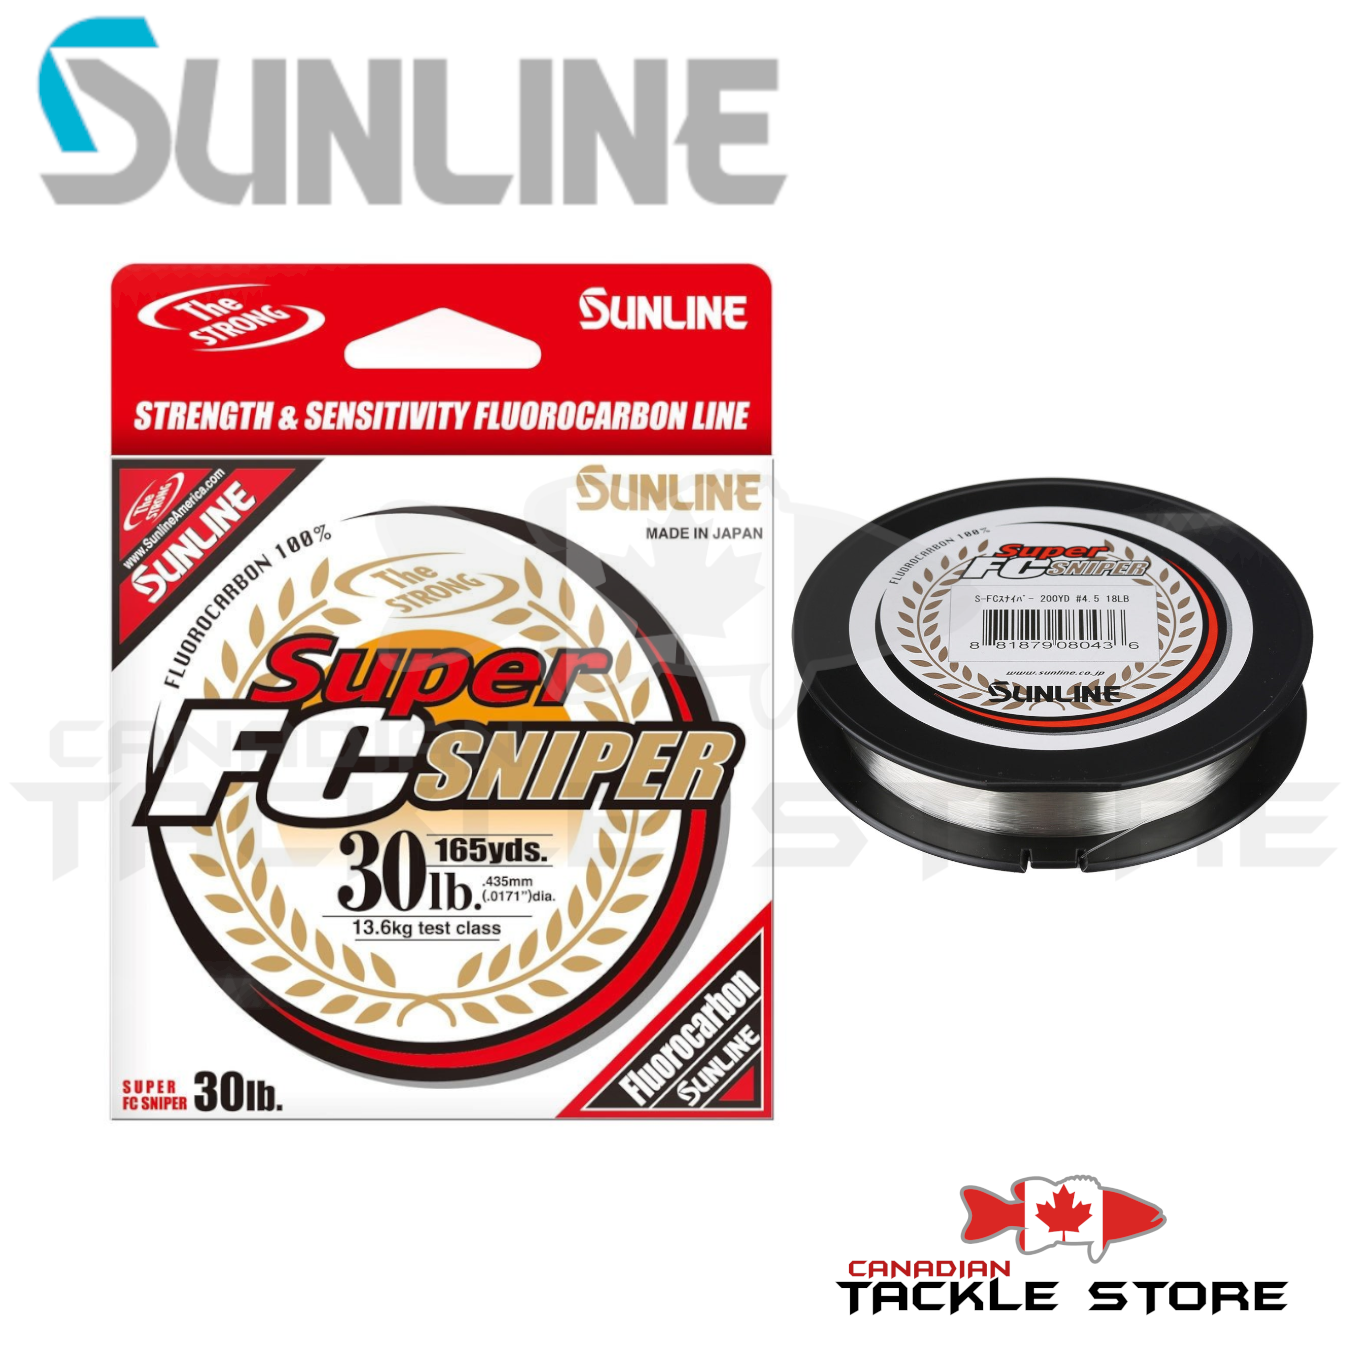 Sunline Super FC Sniper Fluorocarbon Line – Canadian Tackle Store